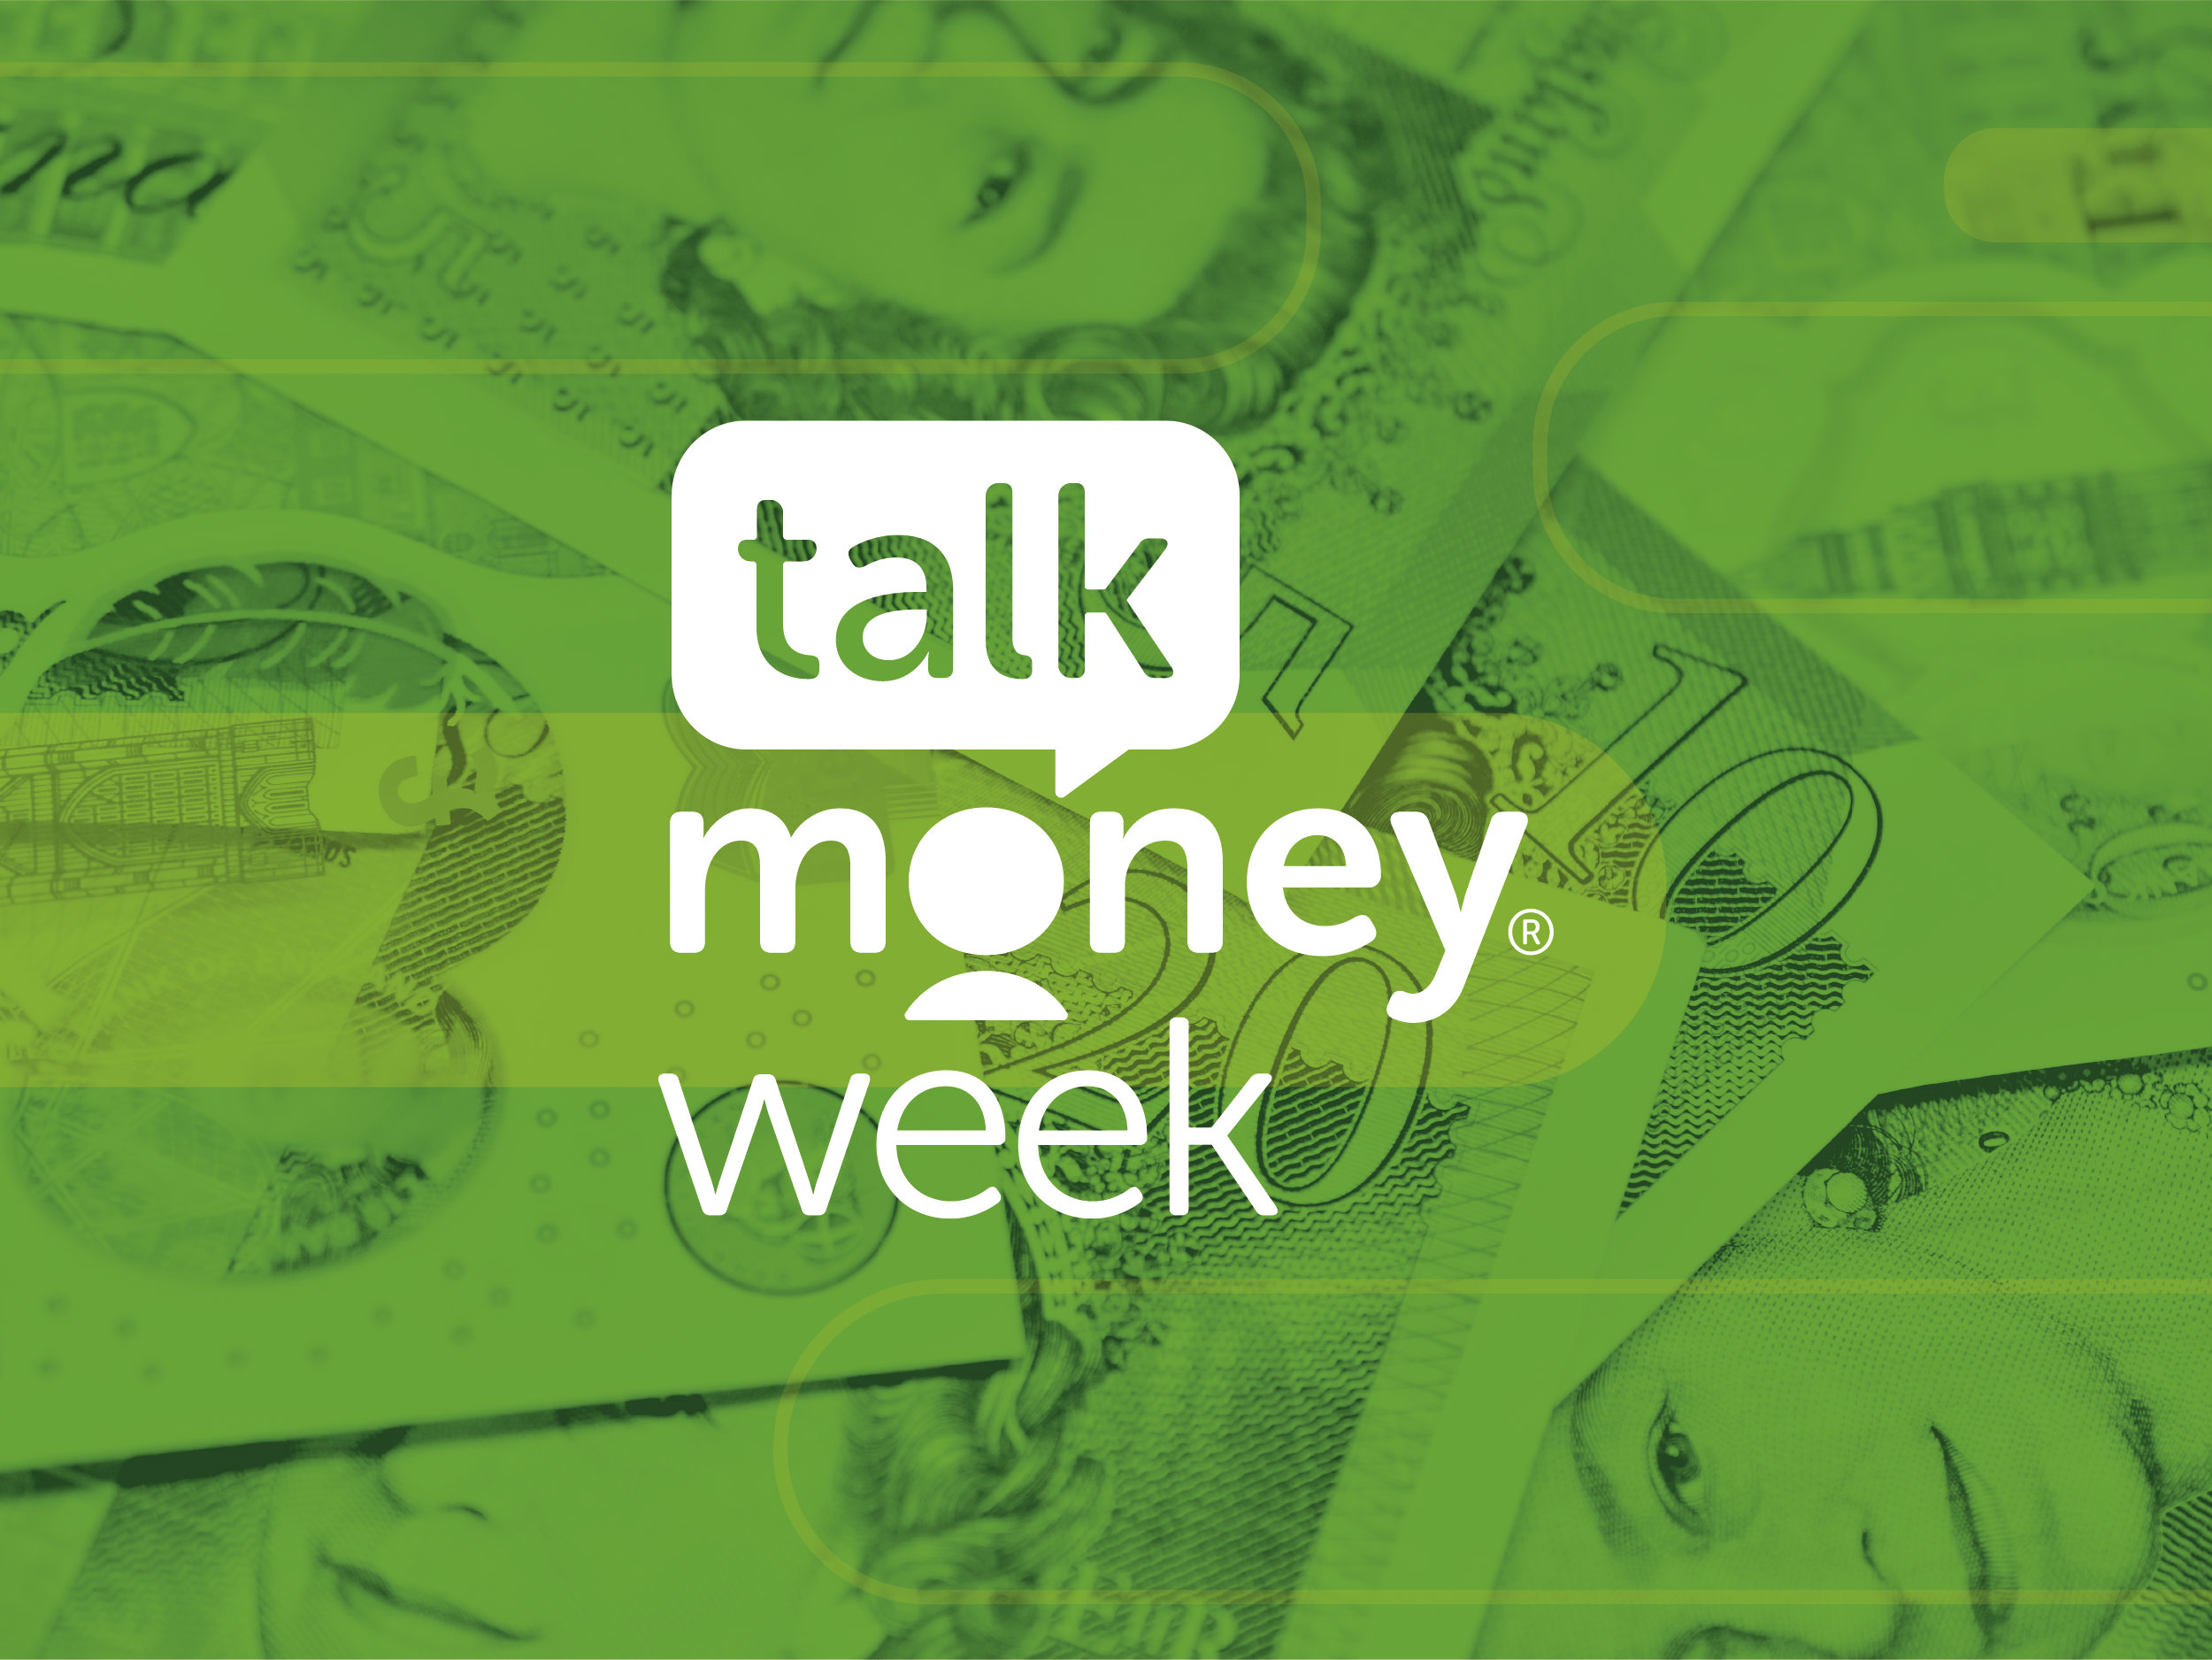 money with overlay 'talk money week'